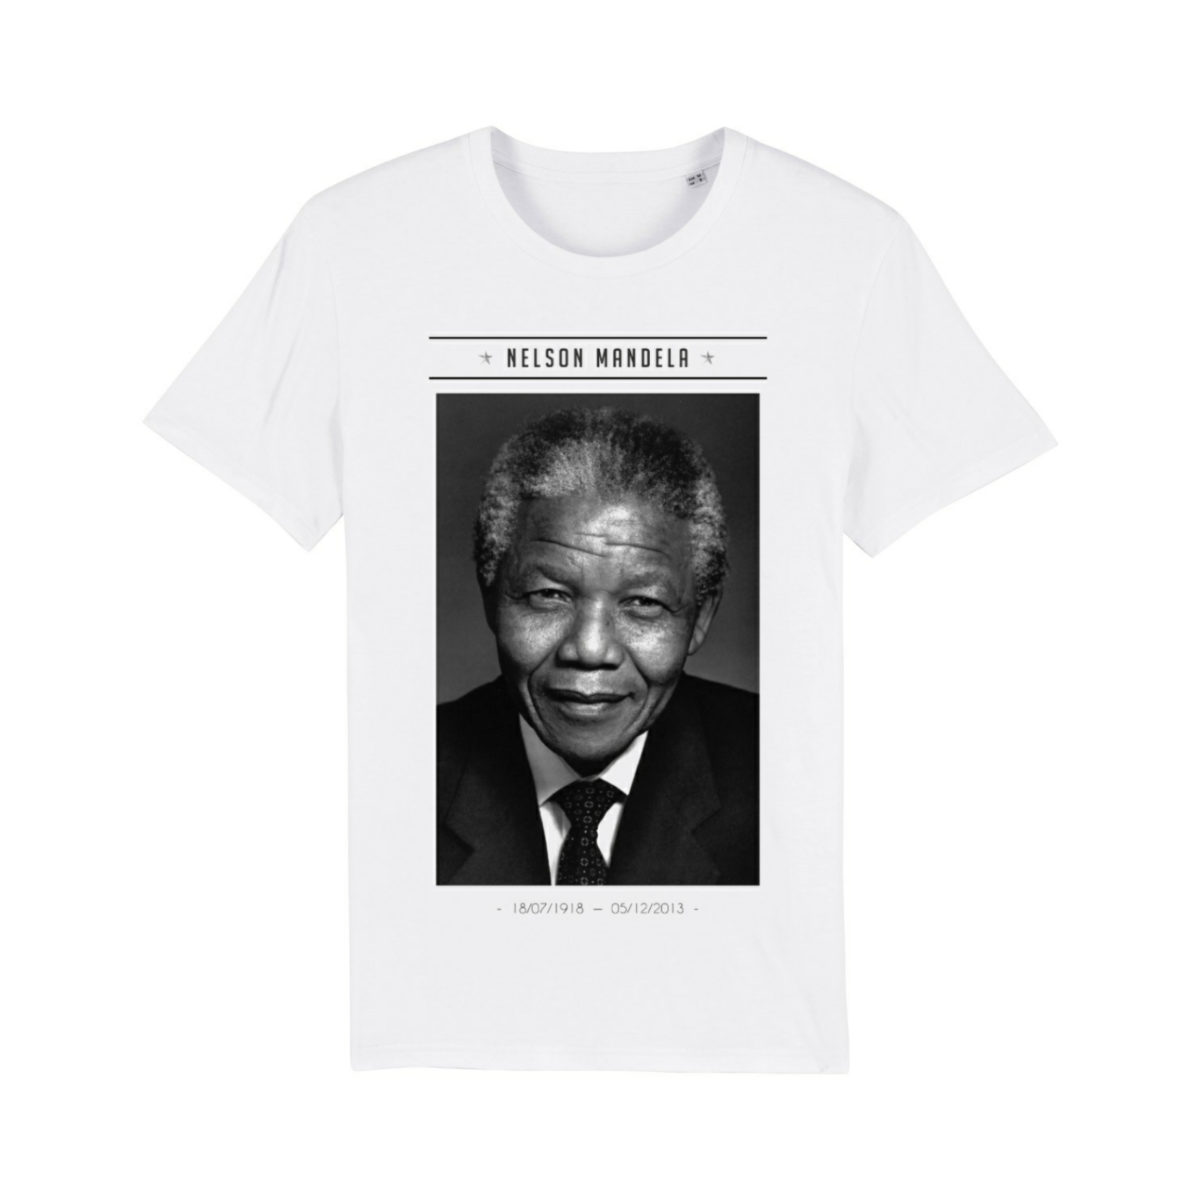 My T-Shirt Afro – “Nelson Mandela”